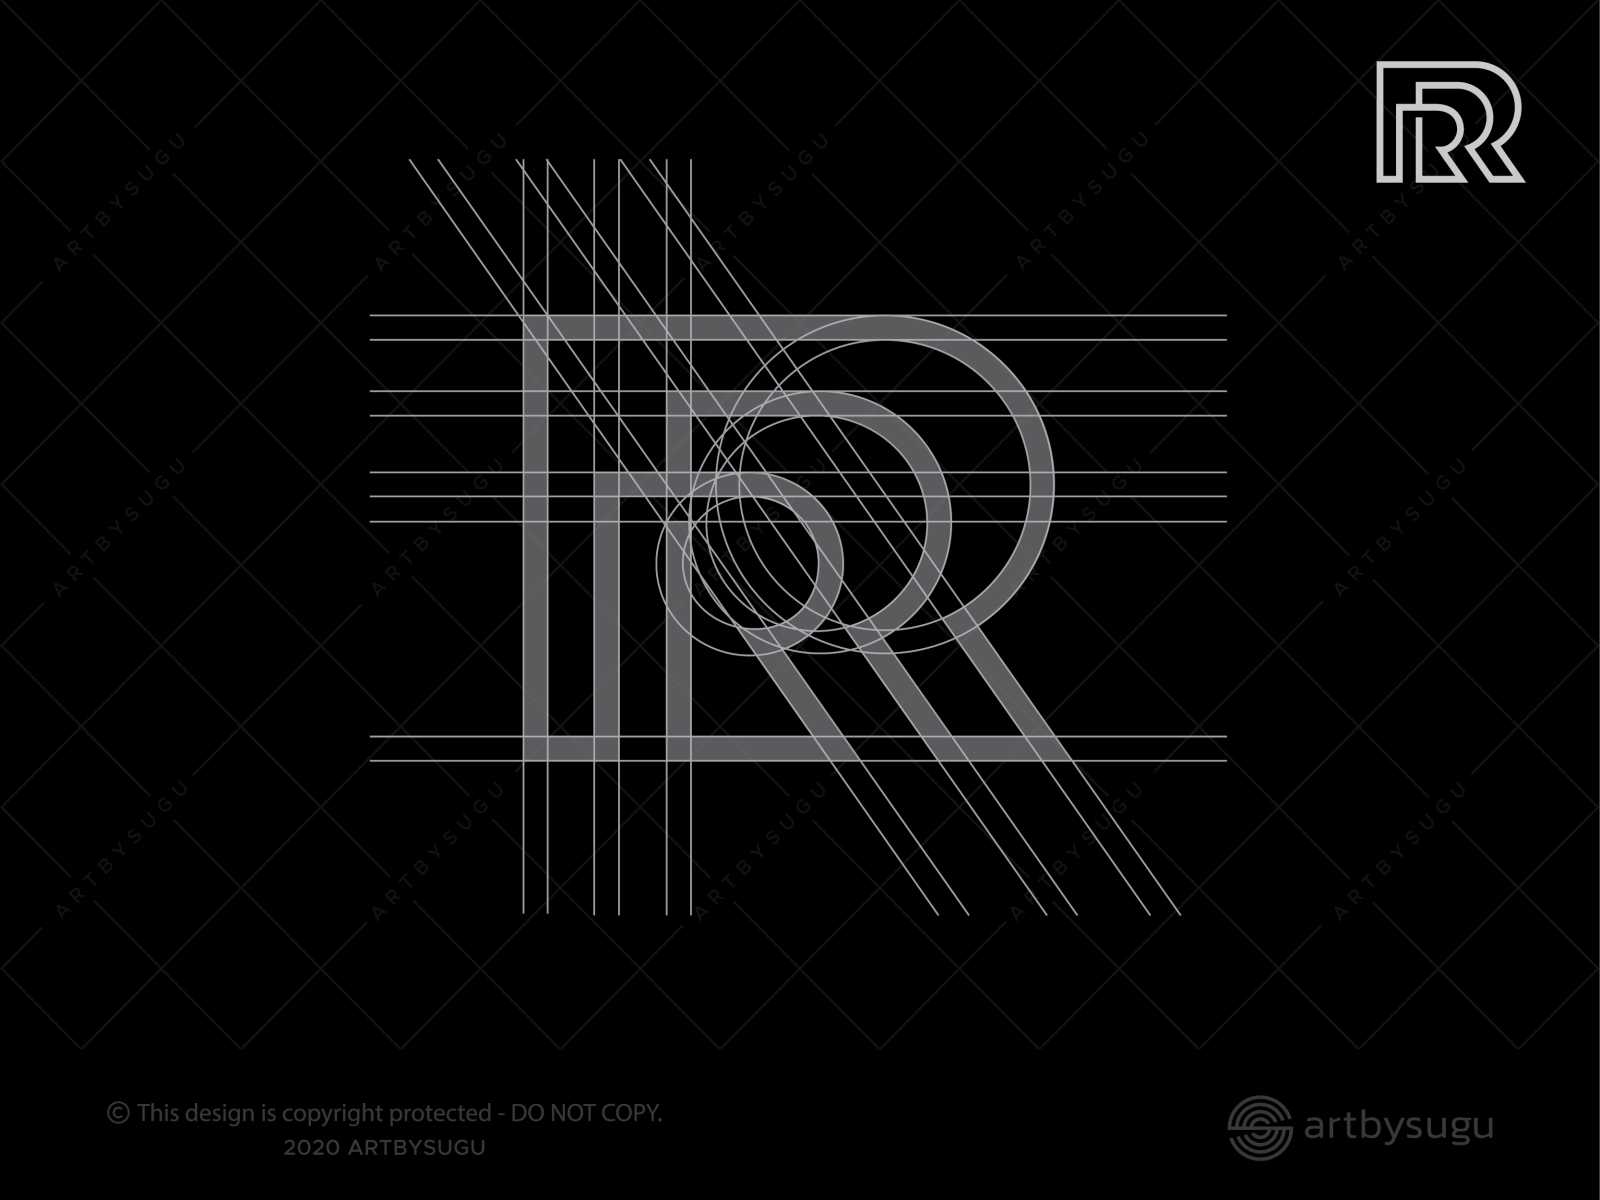 RRR Logo by SenpaiCreations on DeviantArt